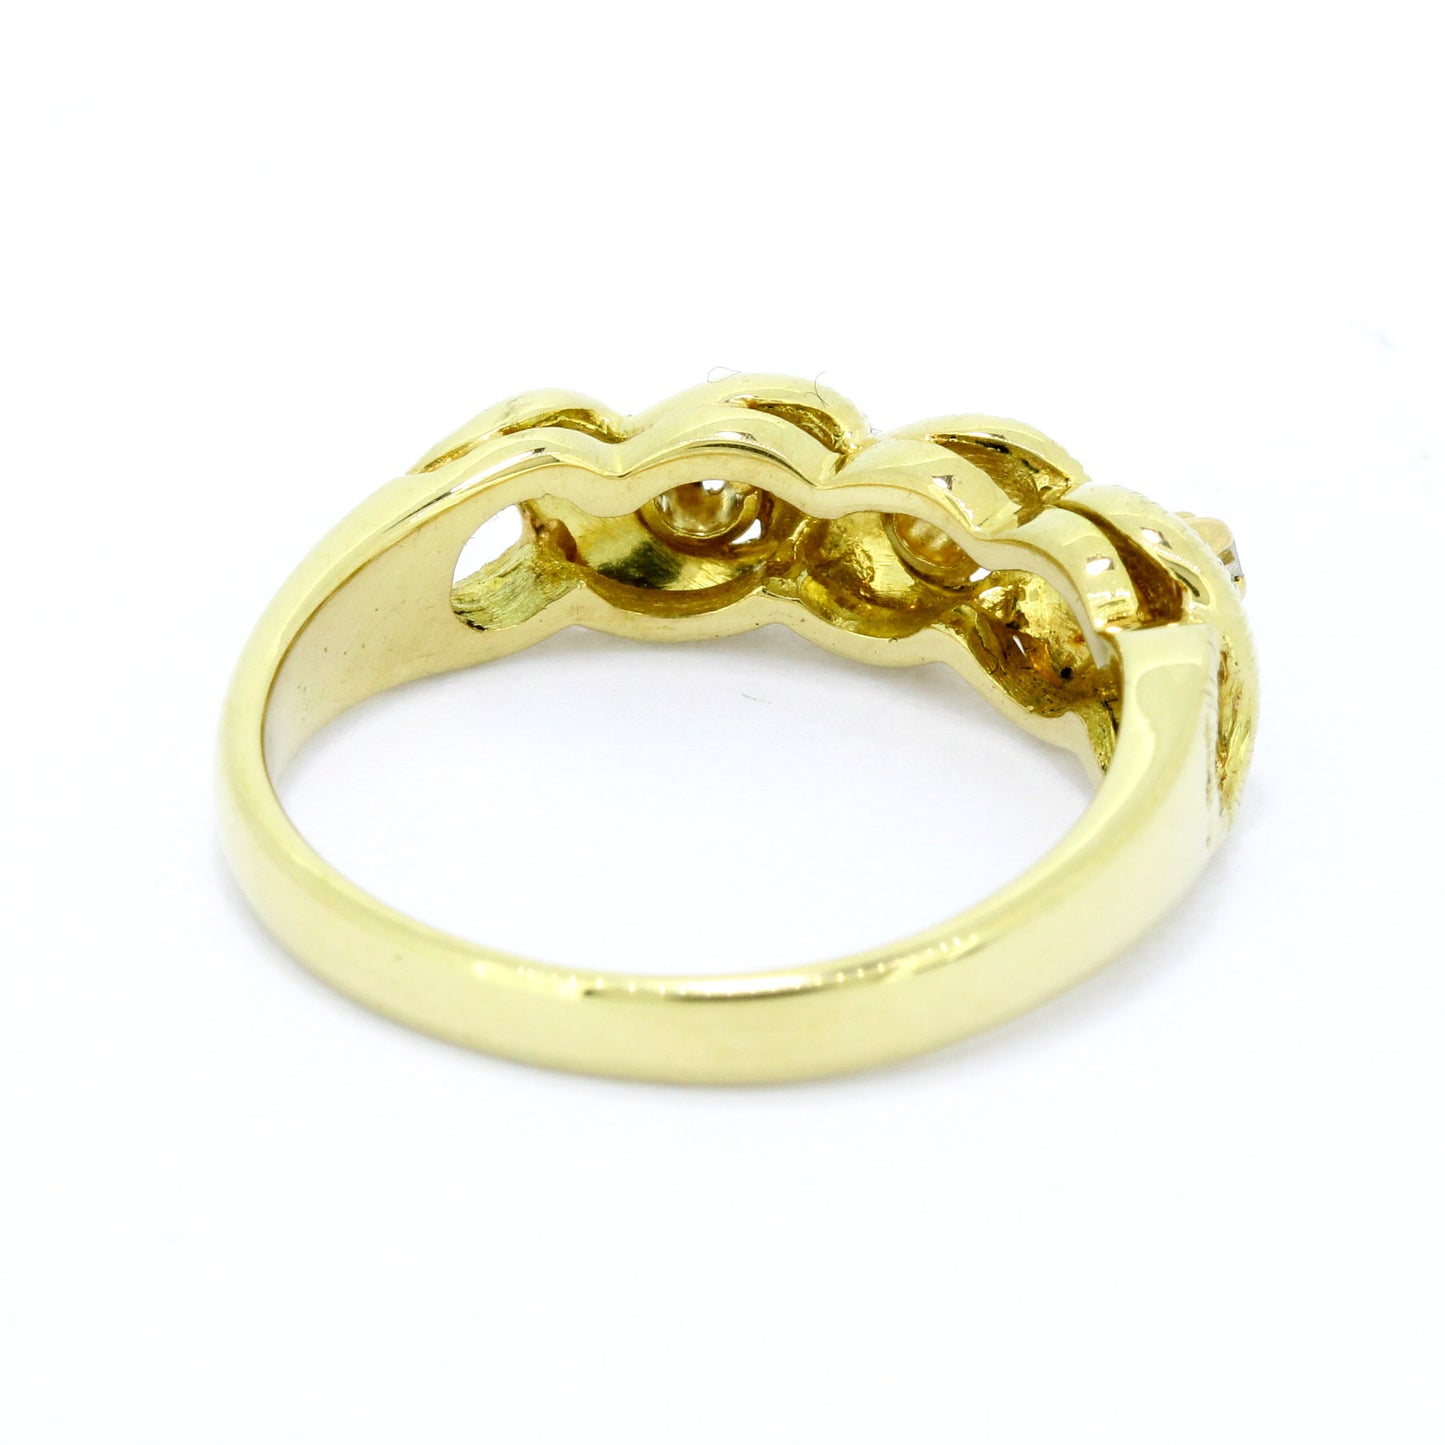 Ring 750 Gold 18 Kt Diamanten 0,07ct Wert 660,-